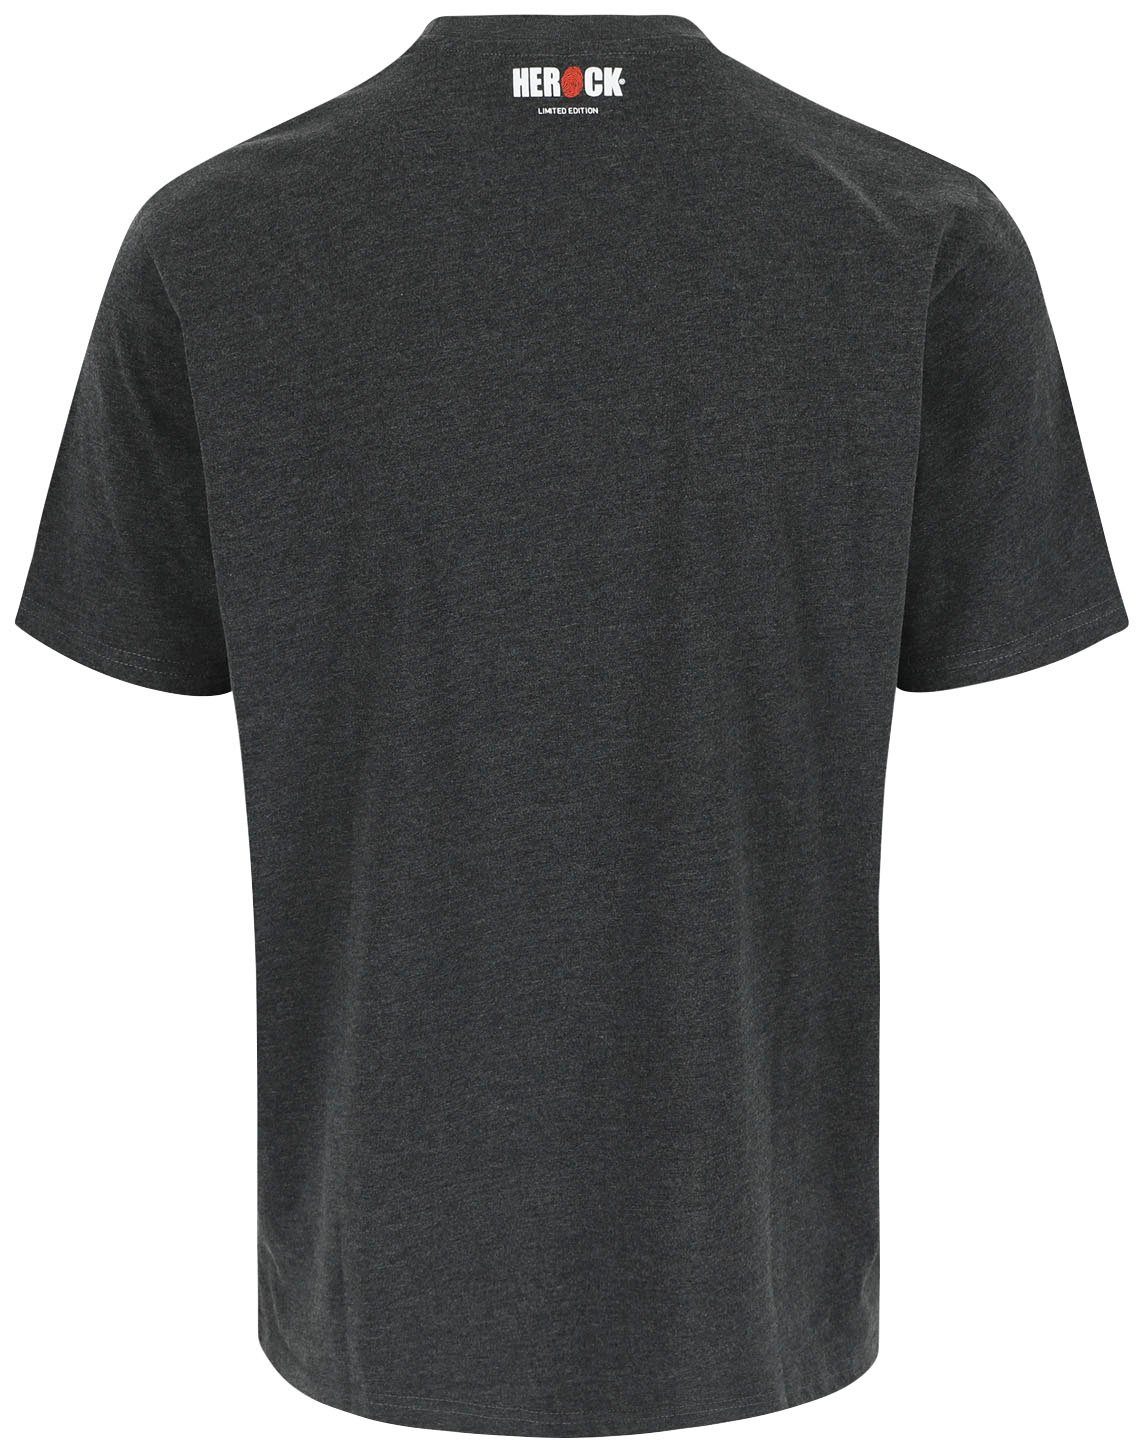 Herock Edition Maximus Limited T-Shirt